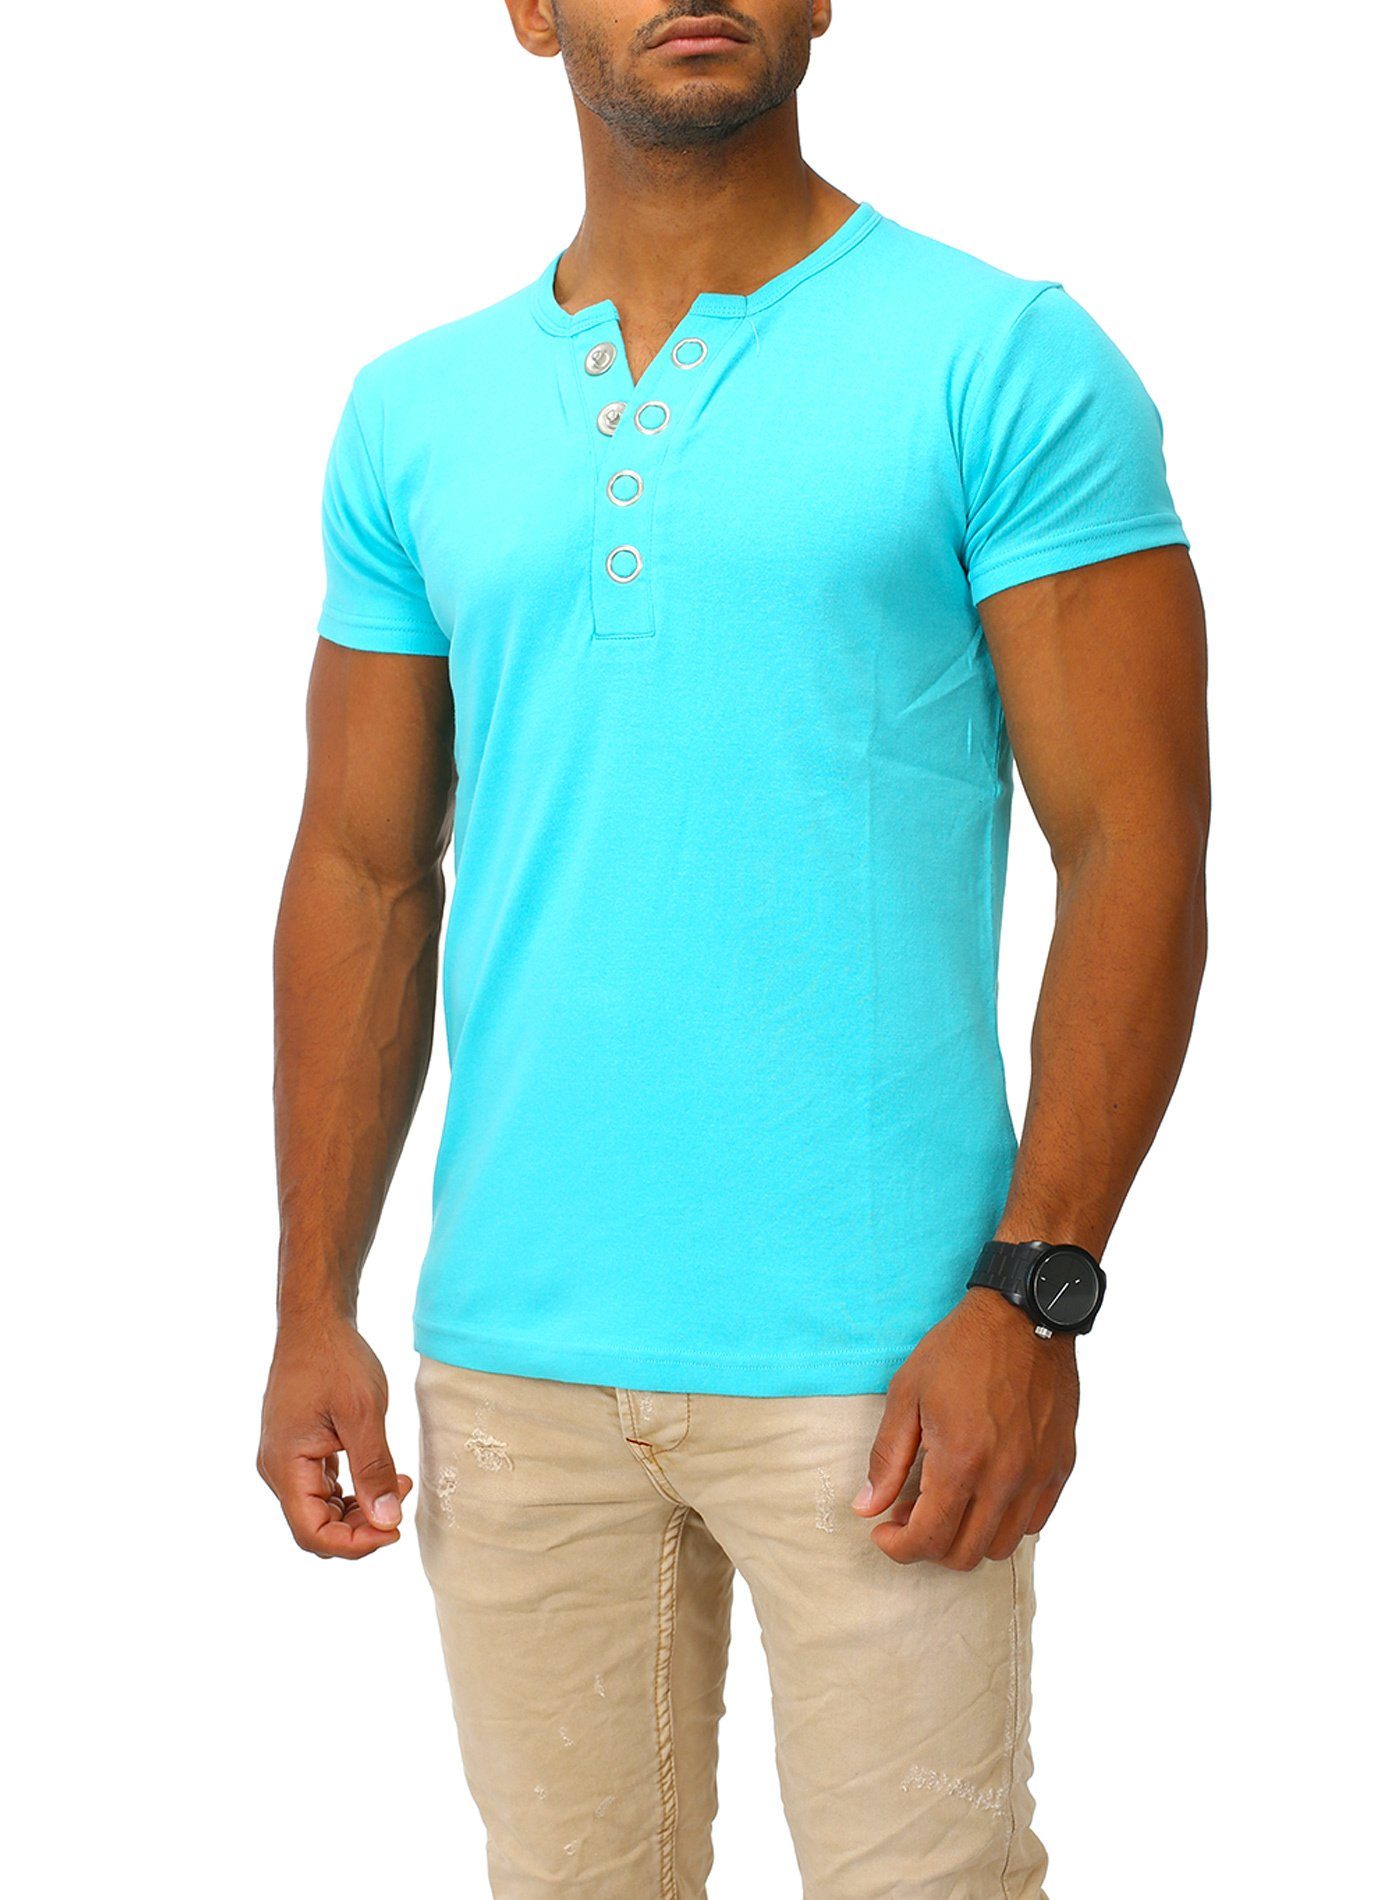 Joe Franks Big Button turquoise stylischem Fit in Slim T-Shirt